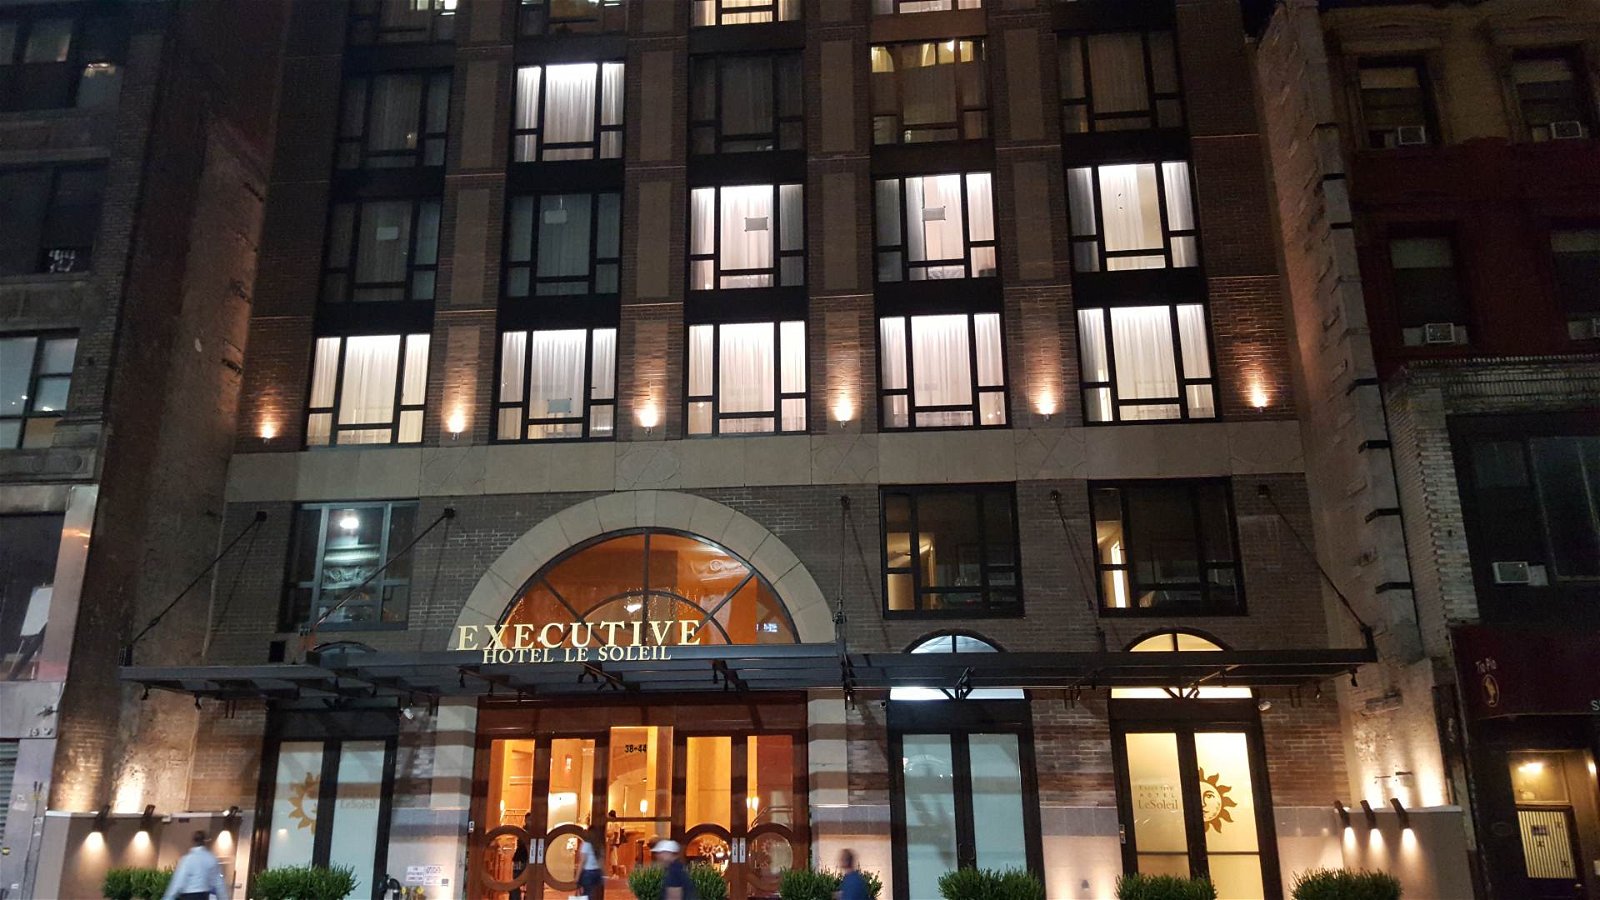 Executive Hotel Le Soleil - New York